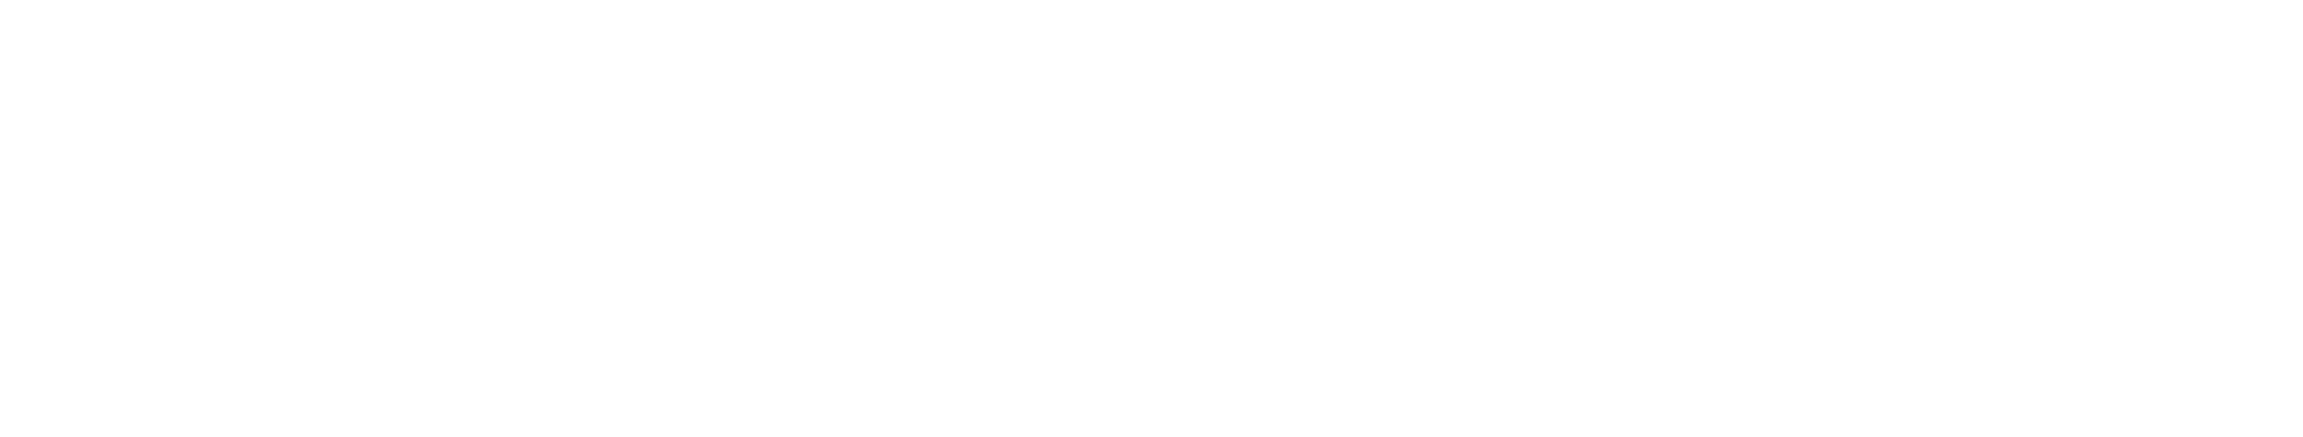 THe Heising-Simons Foundation logo